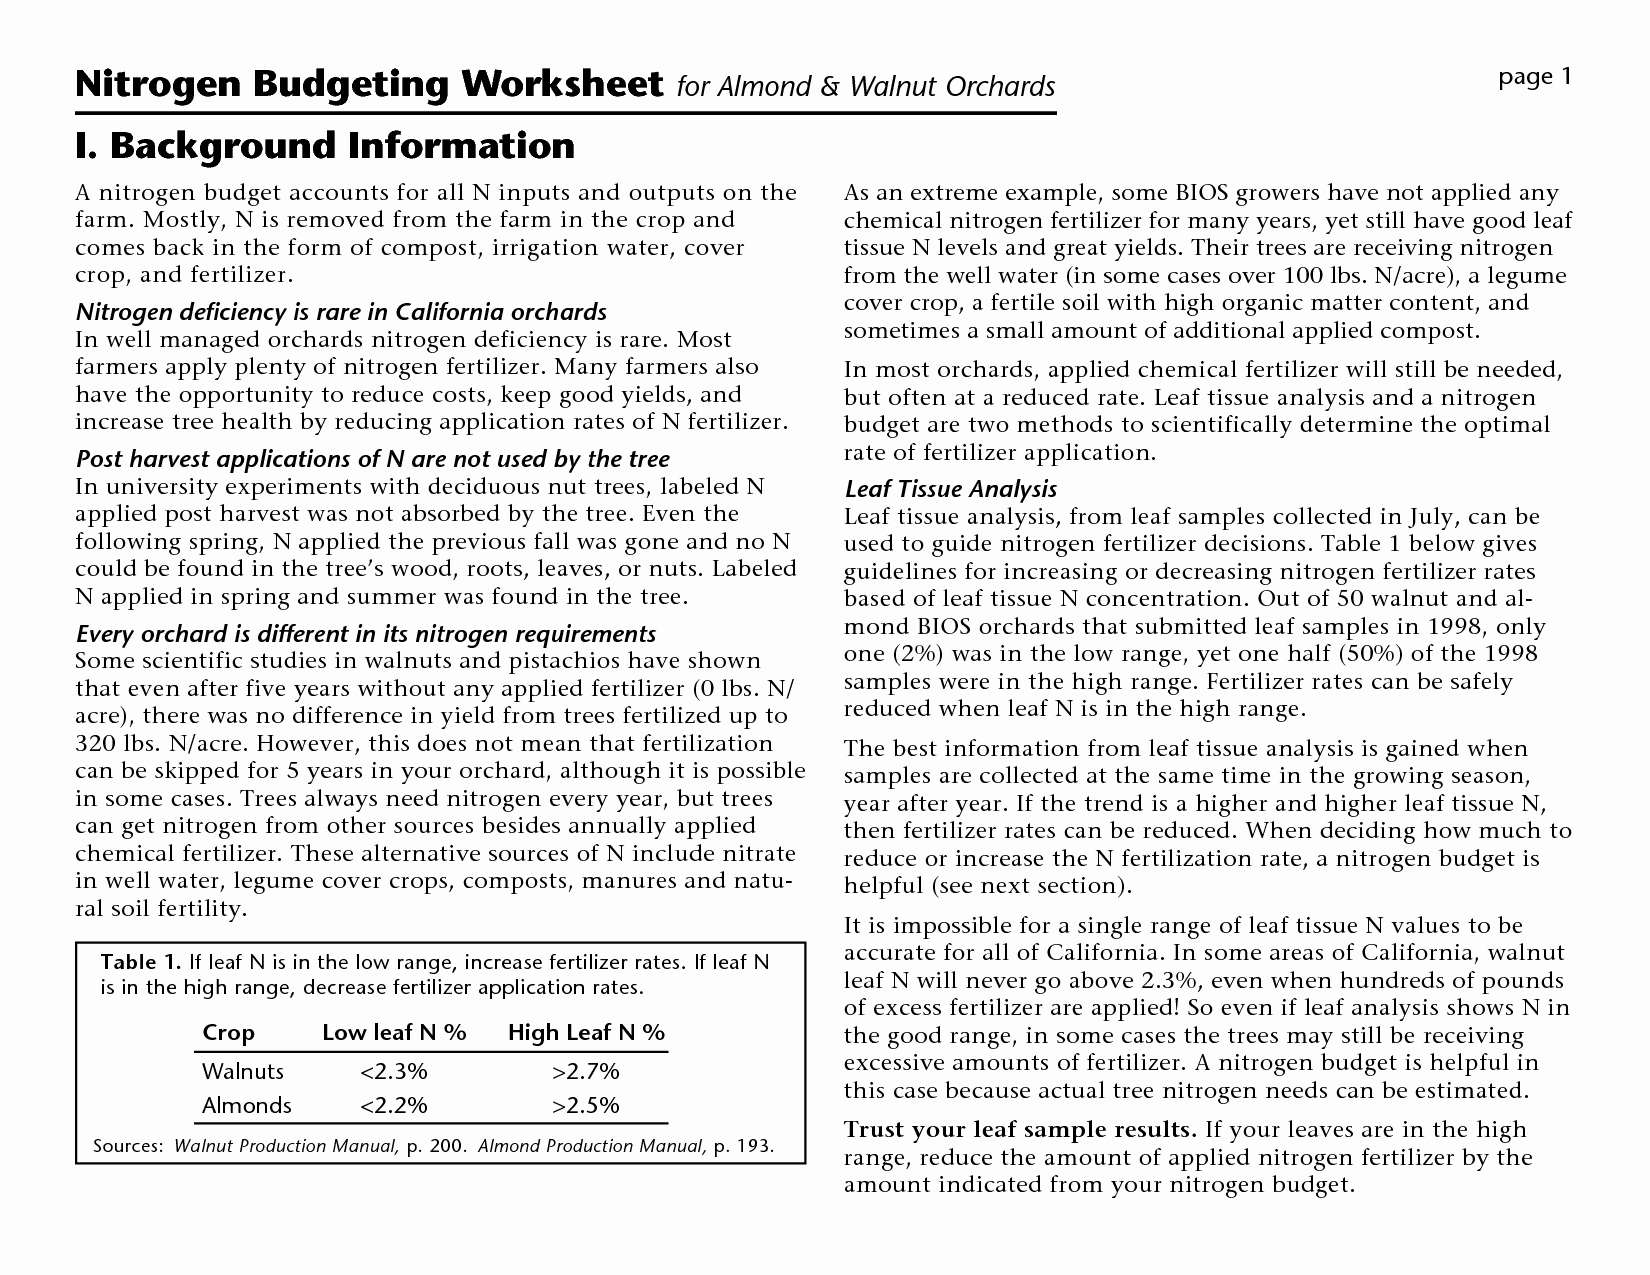 Nitrogen Cycle Worksheet Answers Elegant 17 Best Of Nitrogen Cycle Worksheet Middle School